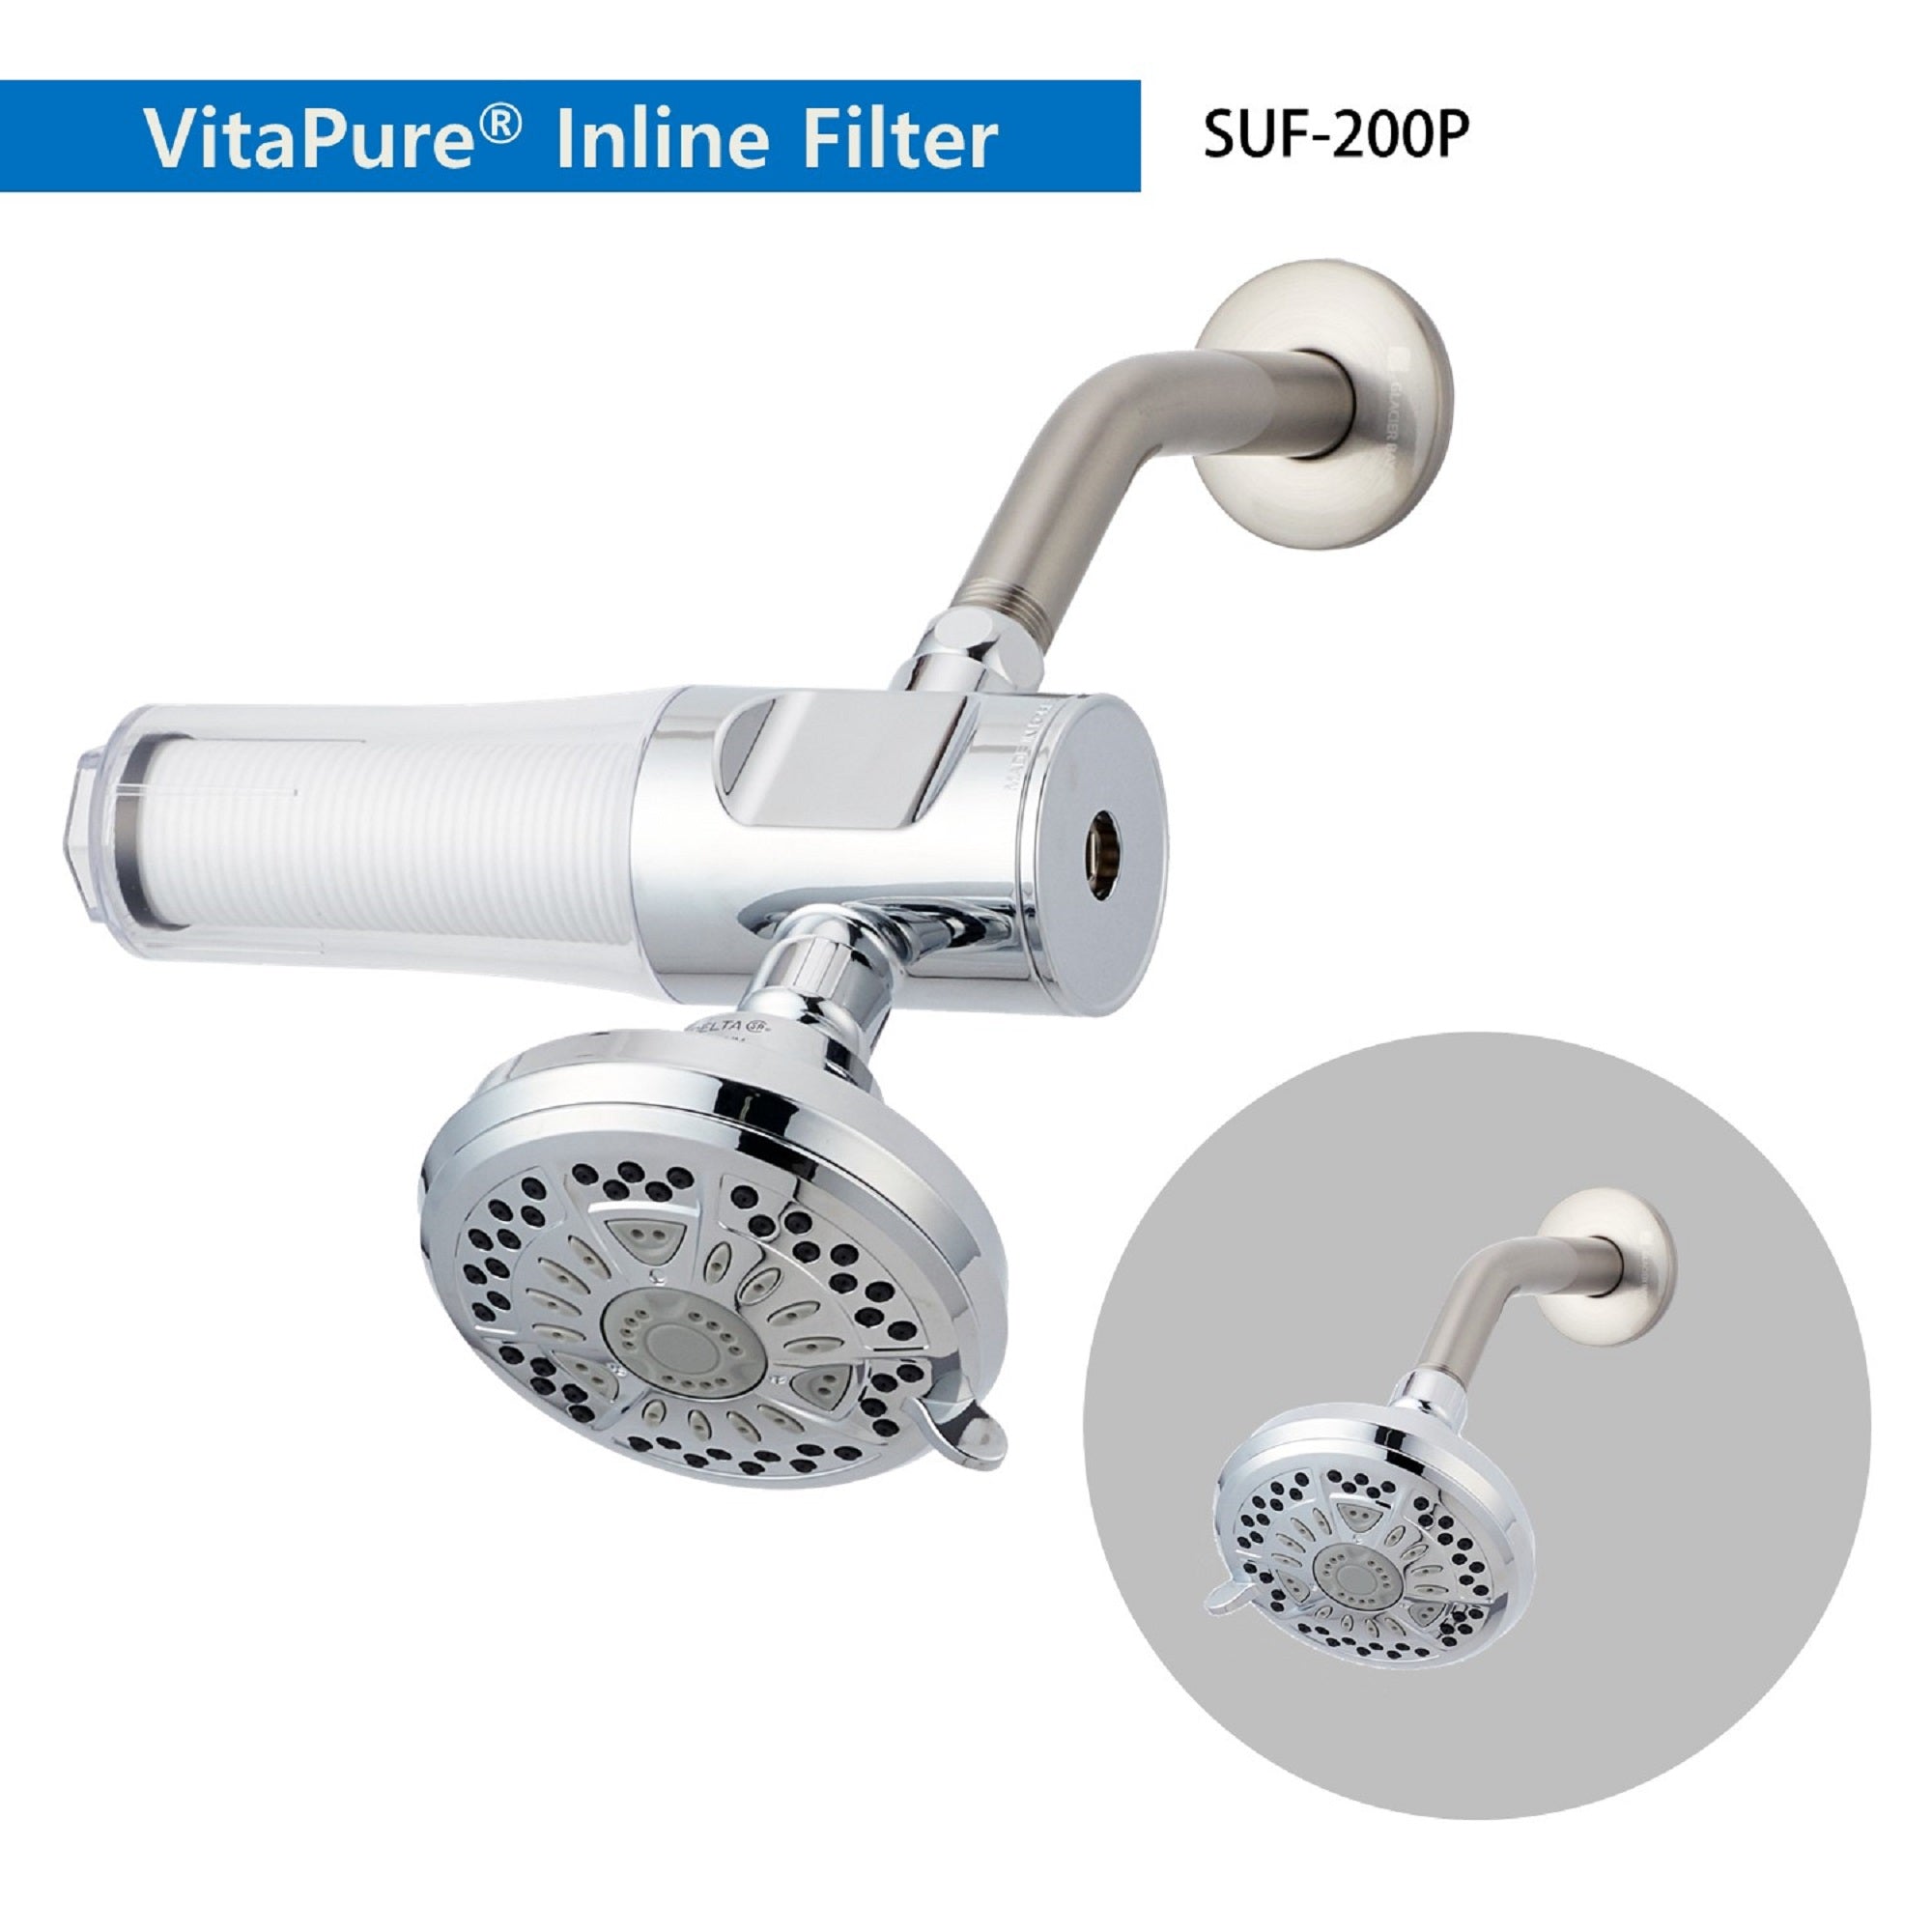 Vitacare Solutions shower filter